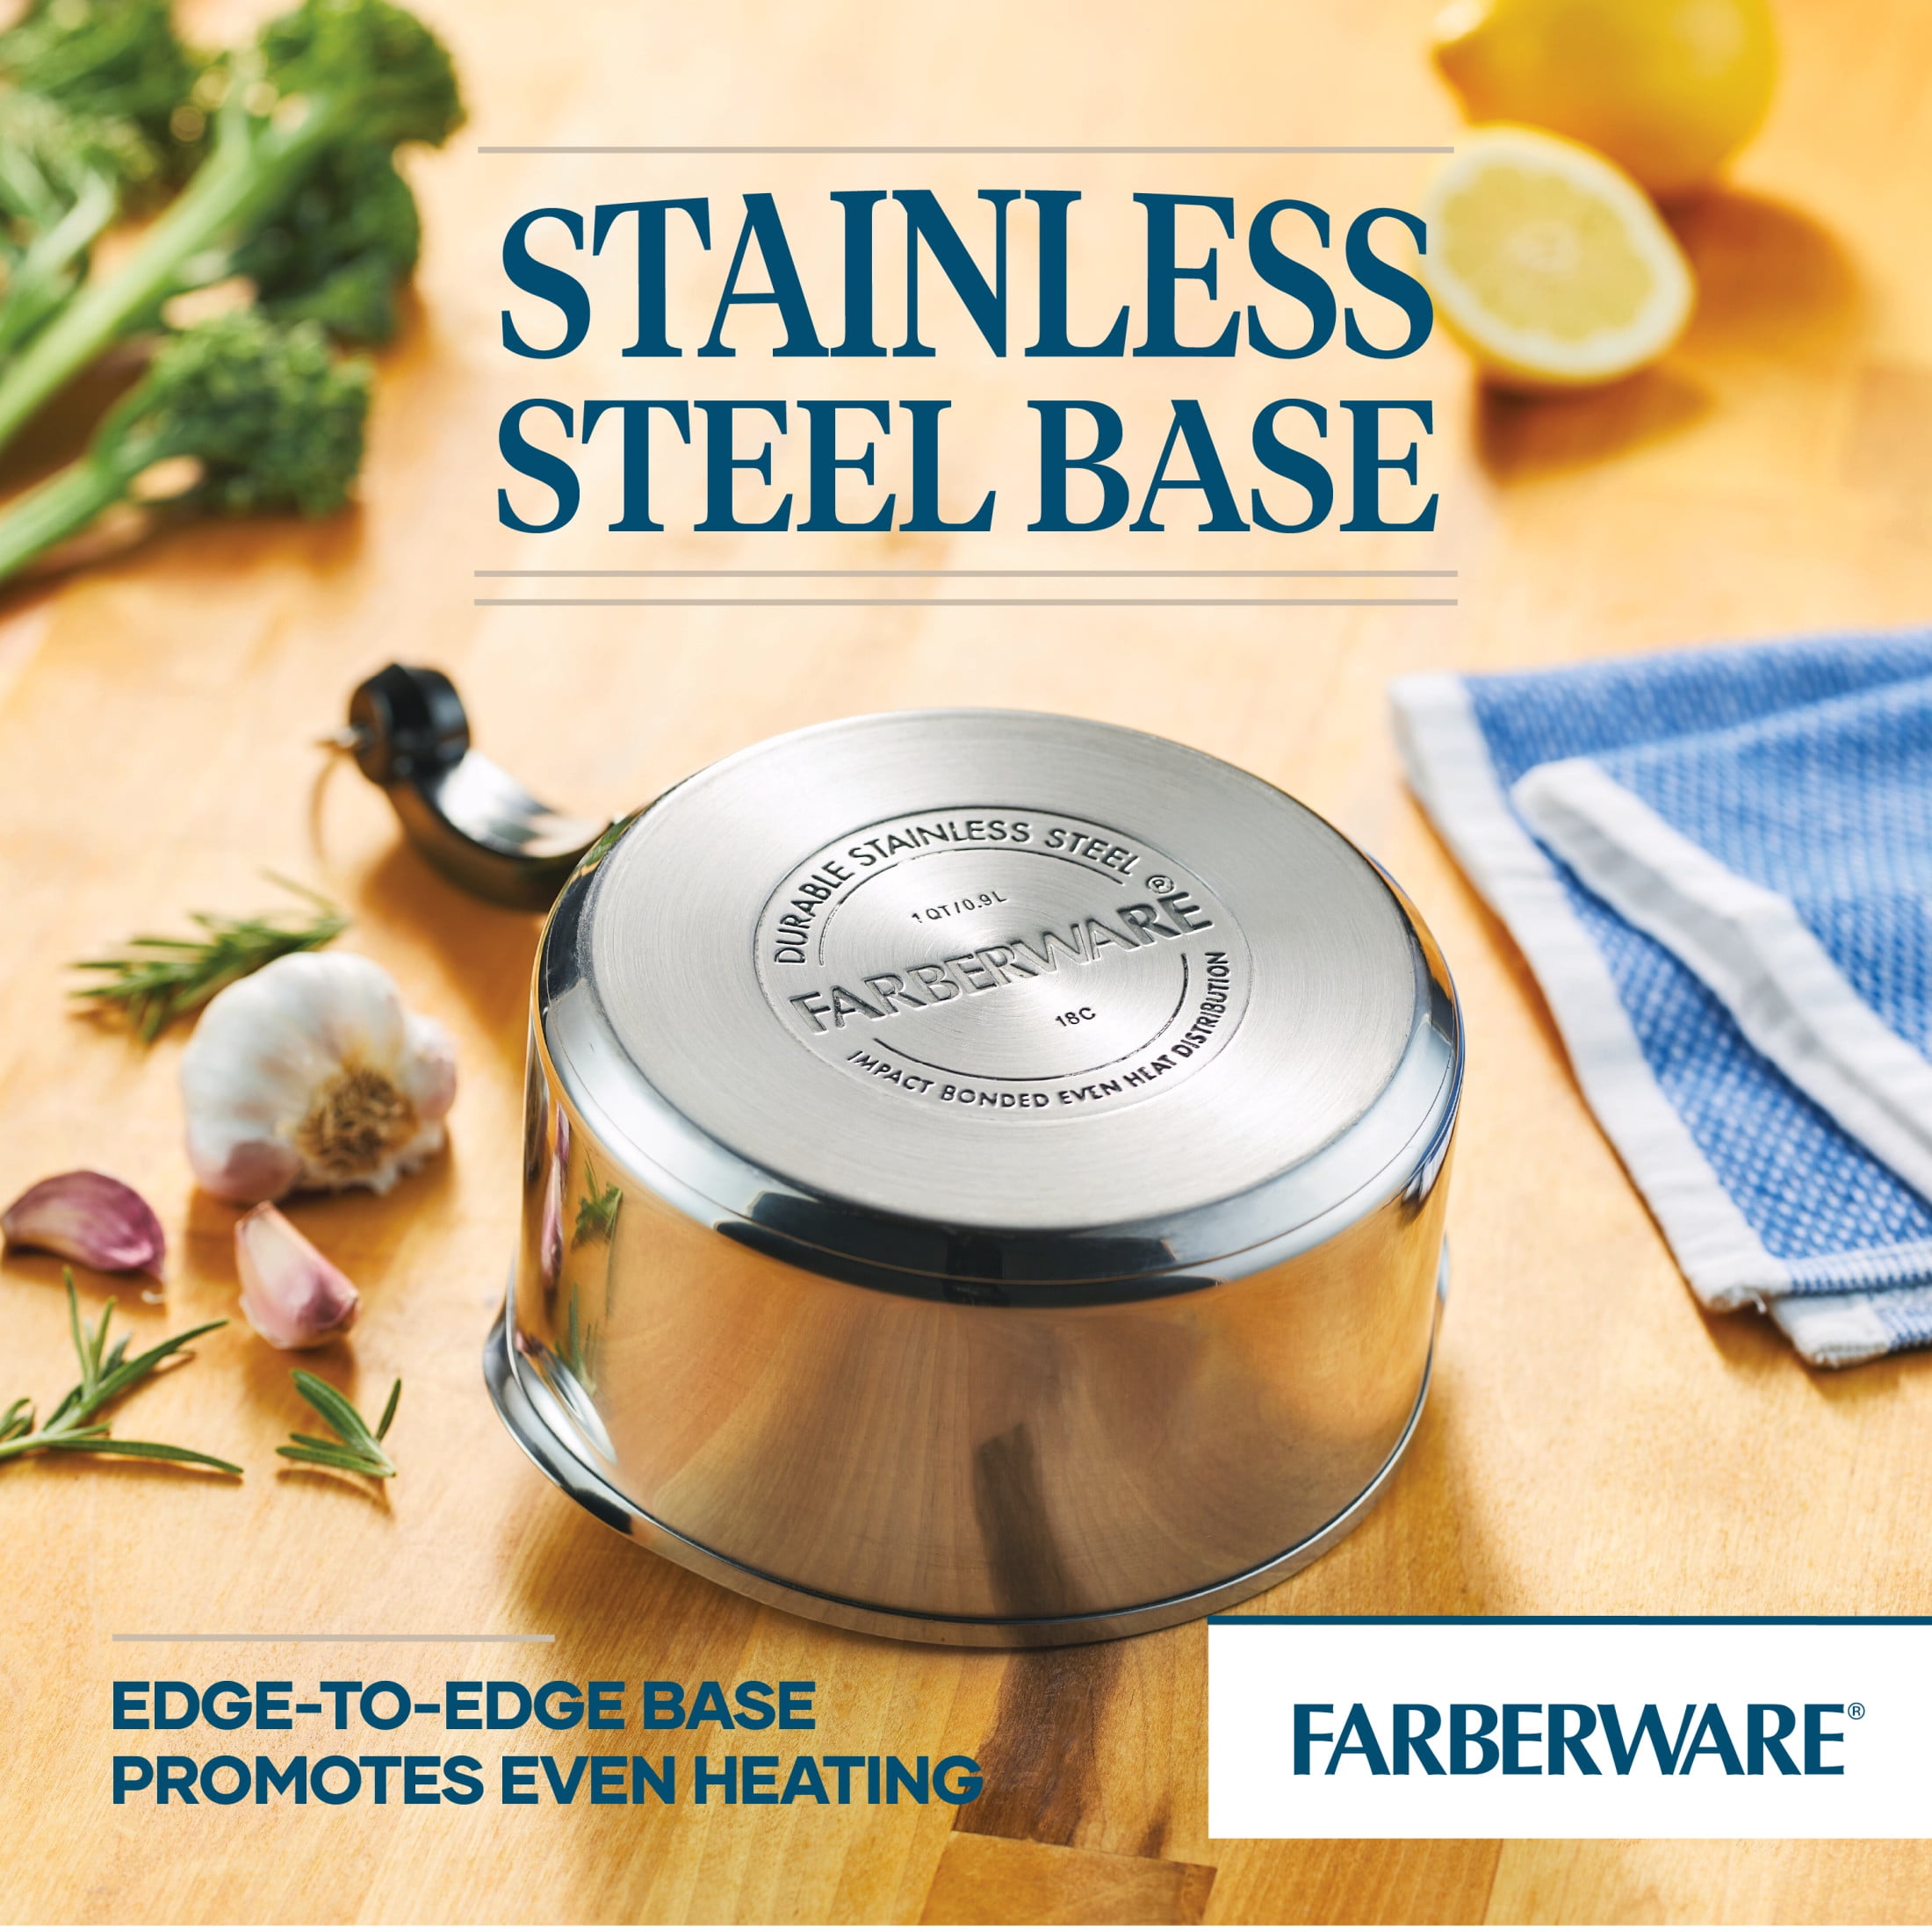 Farberware Classic Stainless Steel 1-Qt. Covered Saucepan